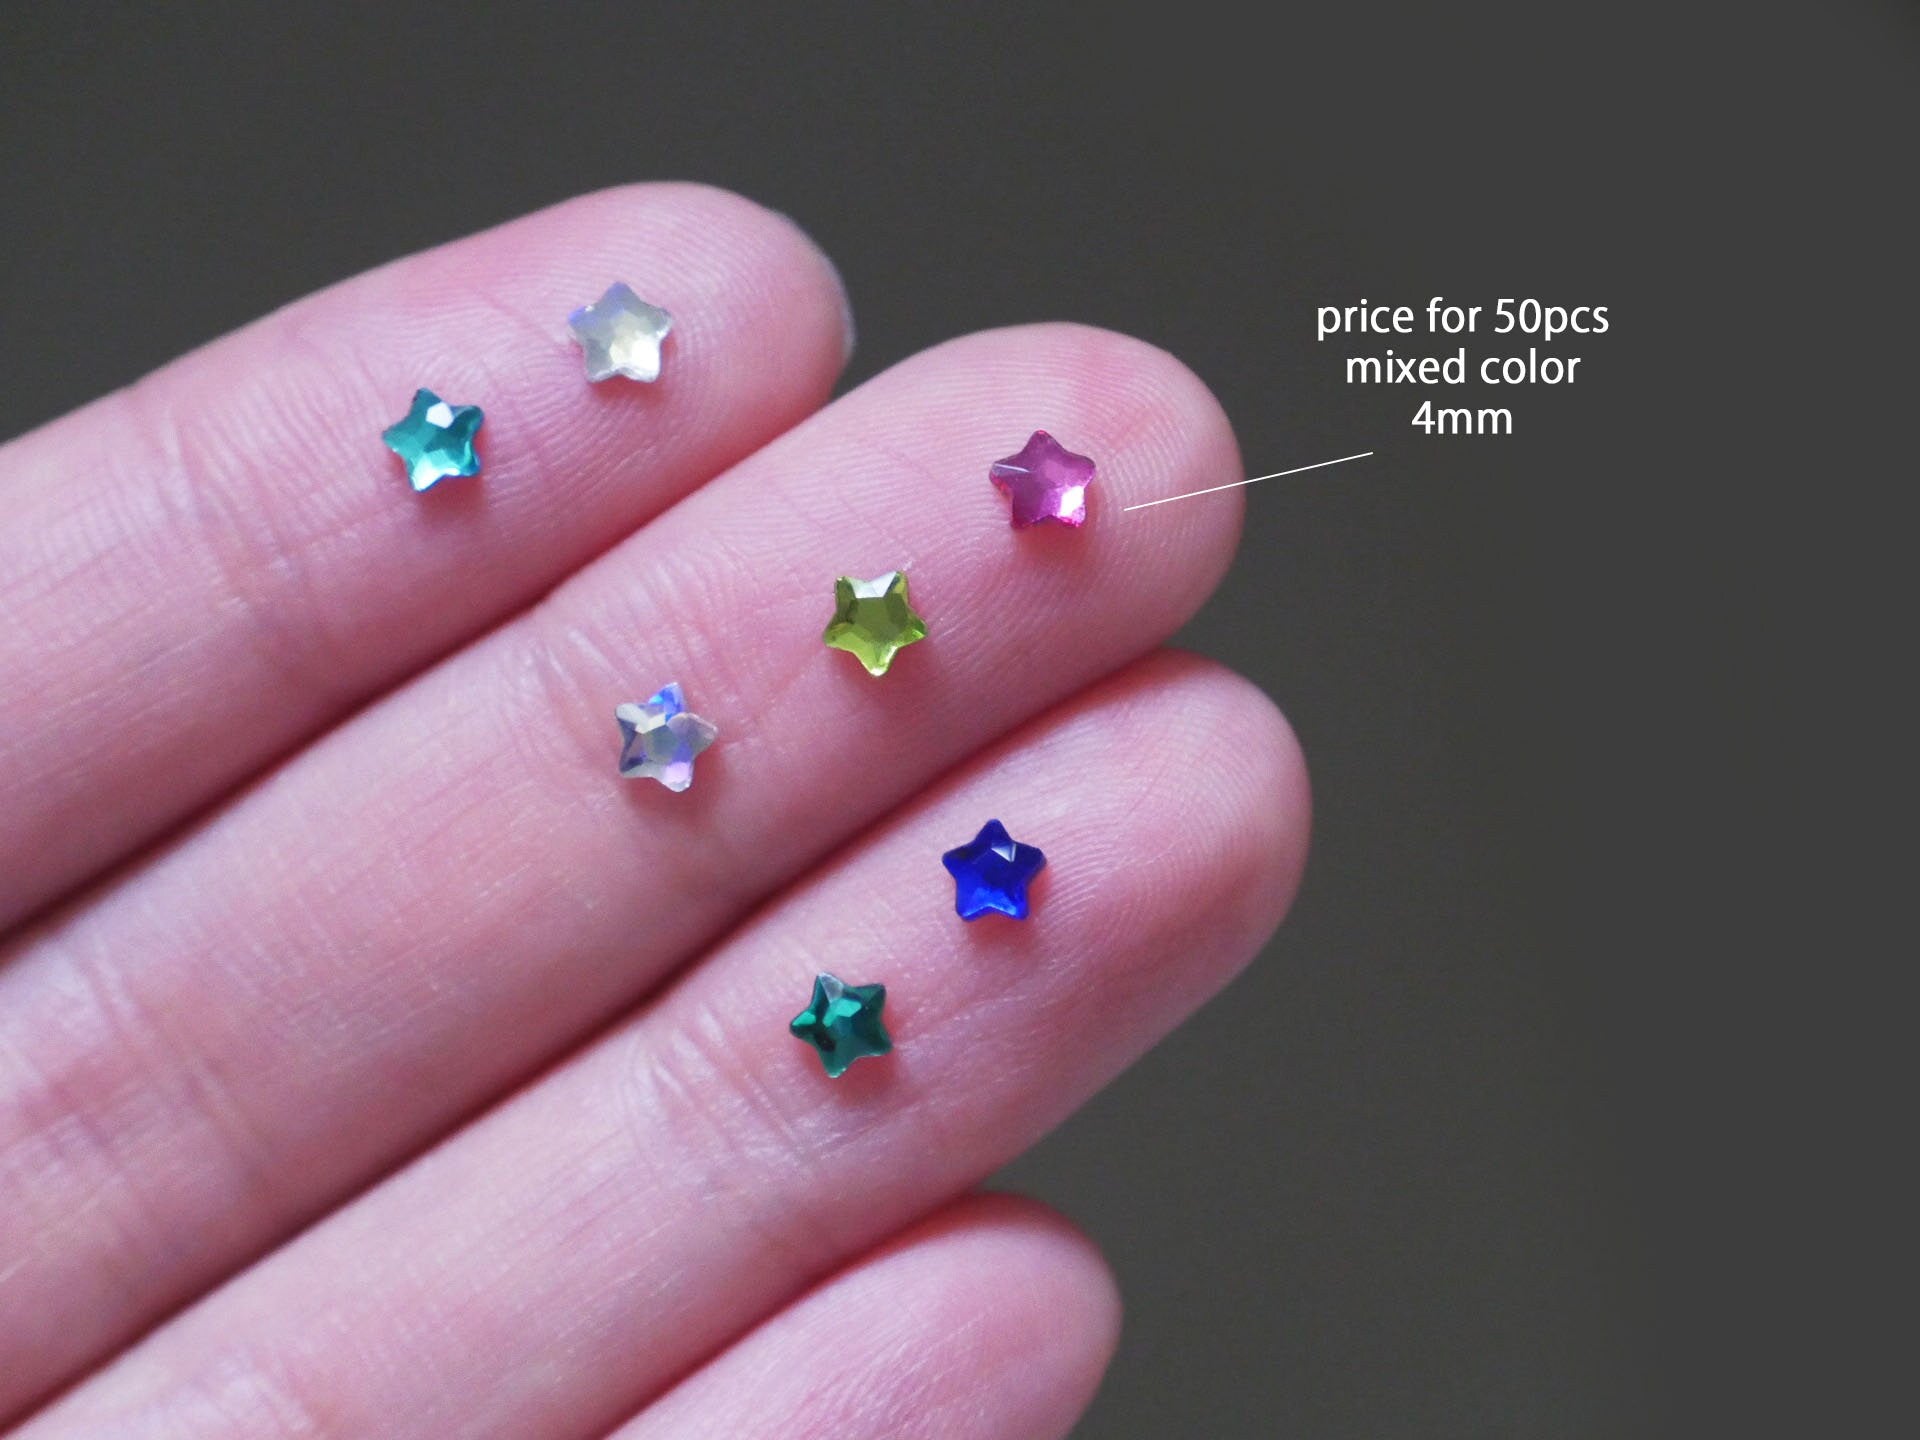 Top quality Crystal AB Rhinestones Flat Back Gems for Nails